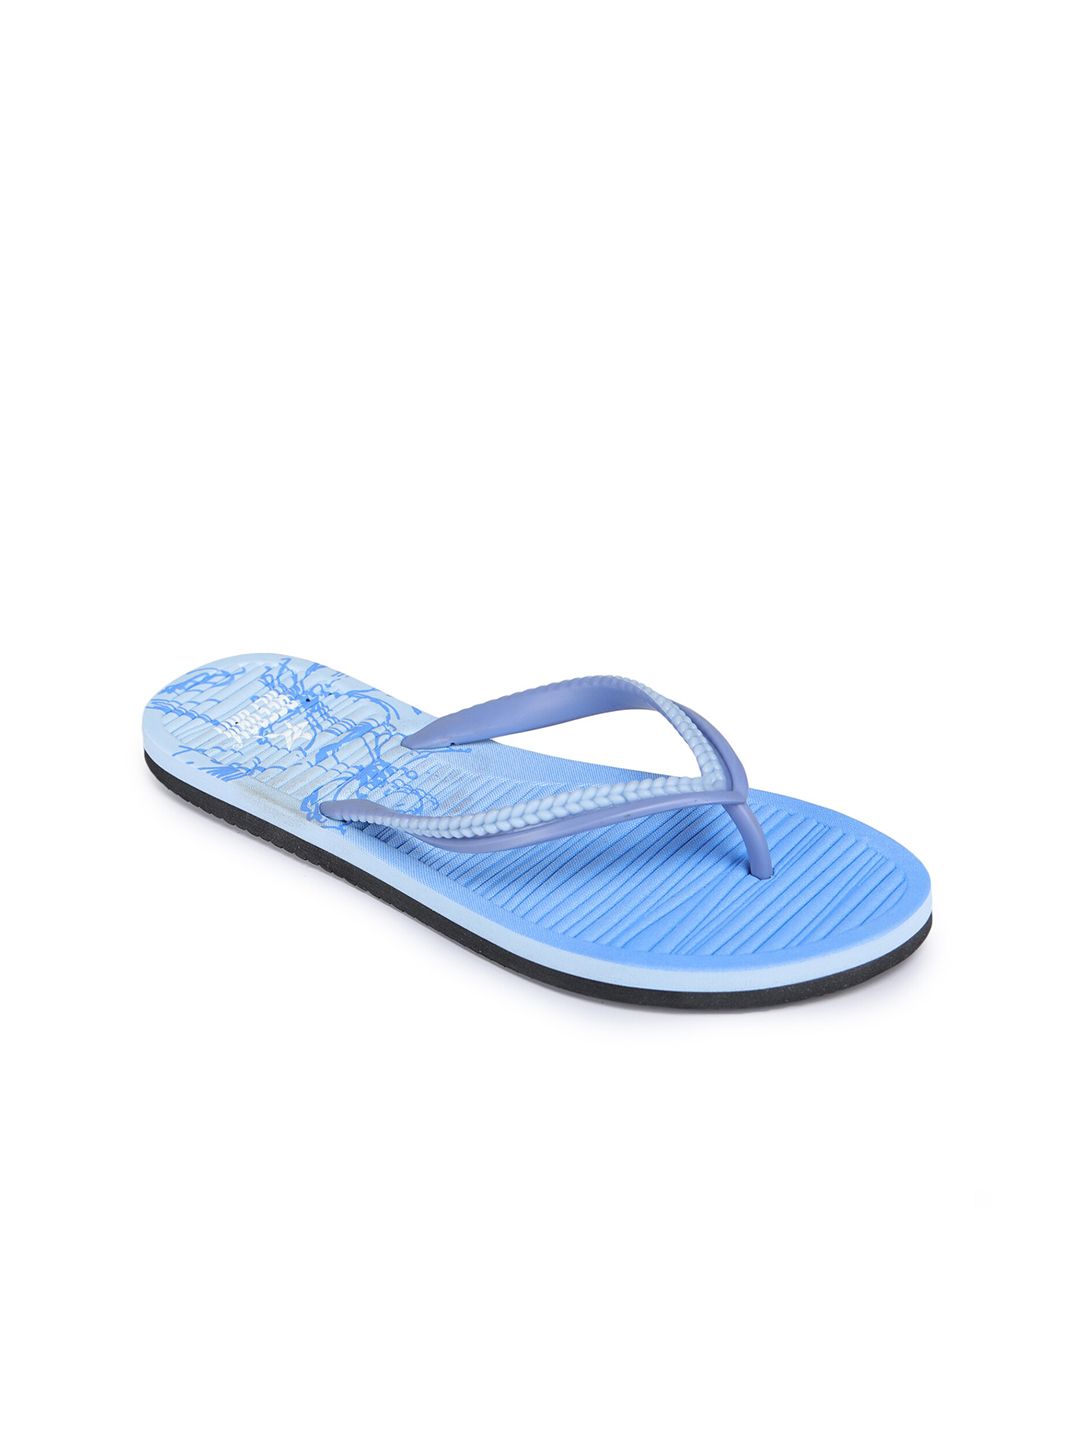 REFOAM Women Blue & White Printed Thong Flip-Flops Price in India